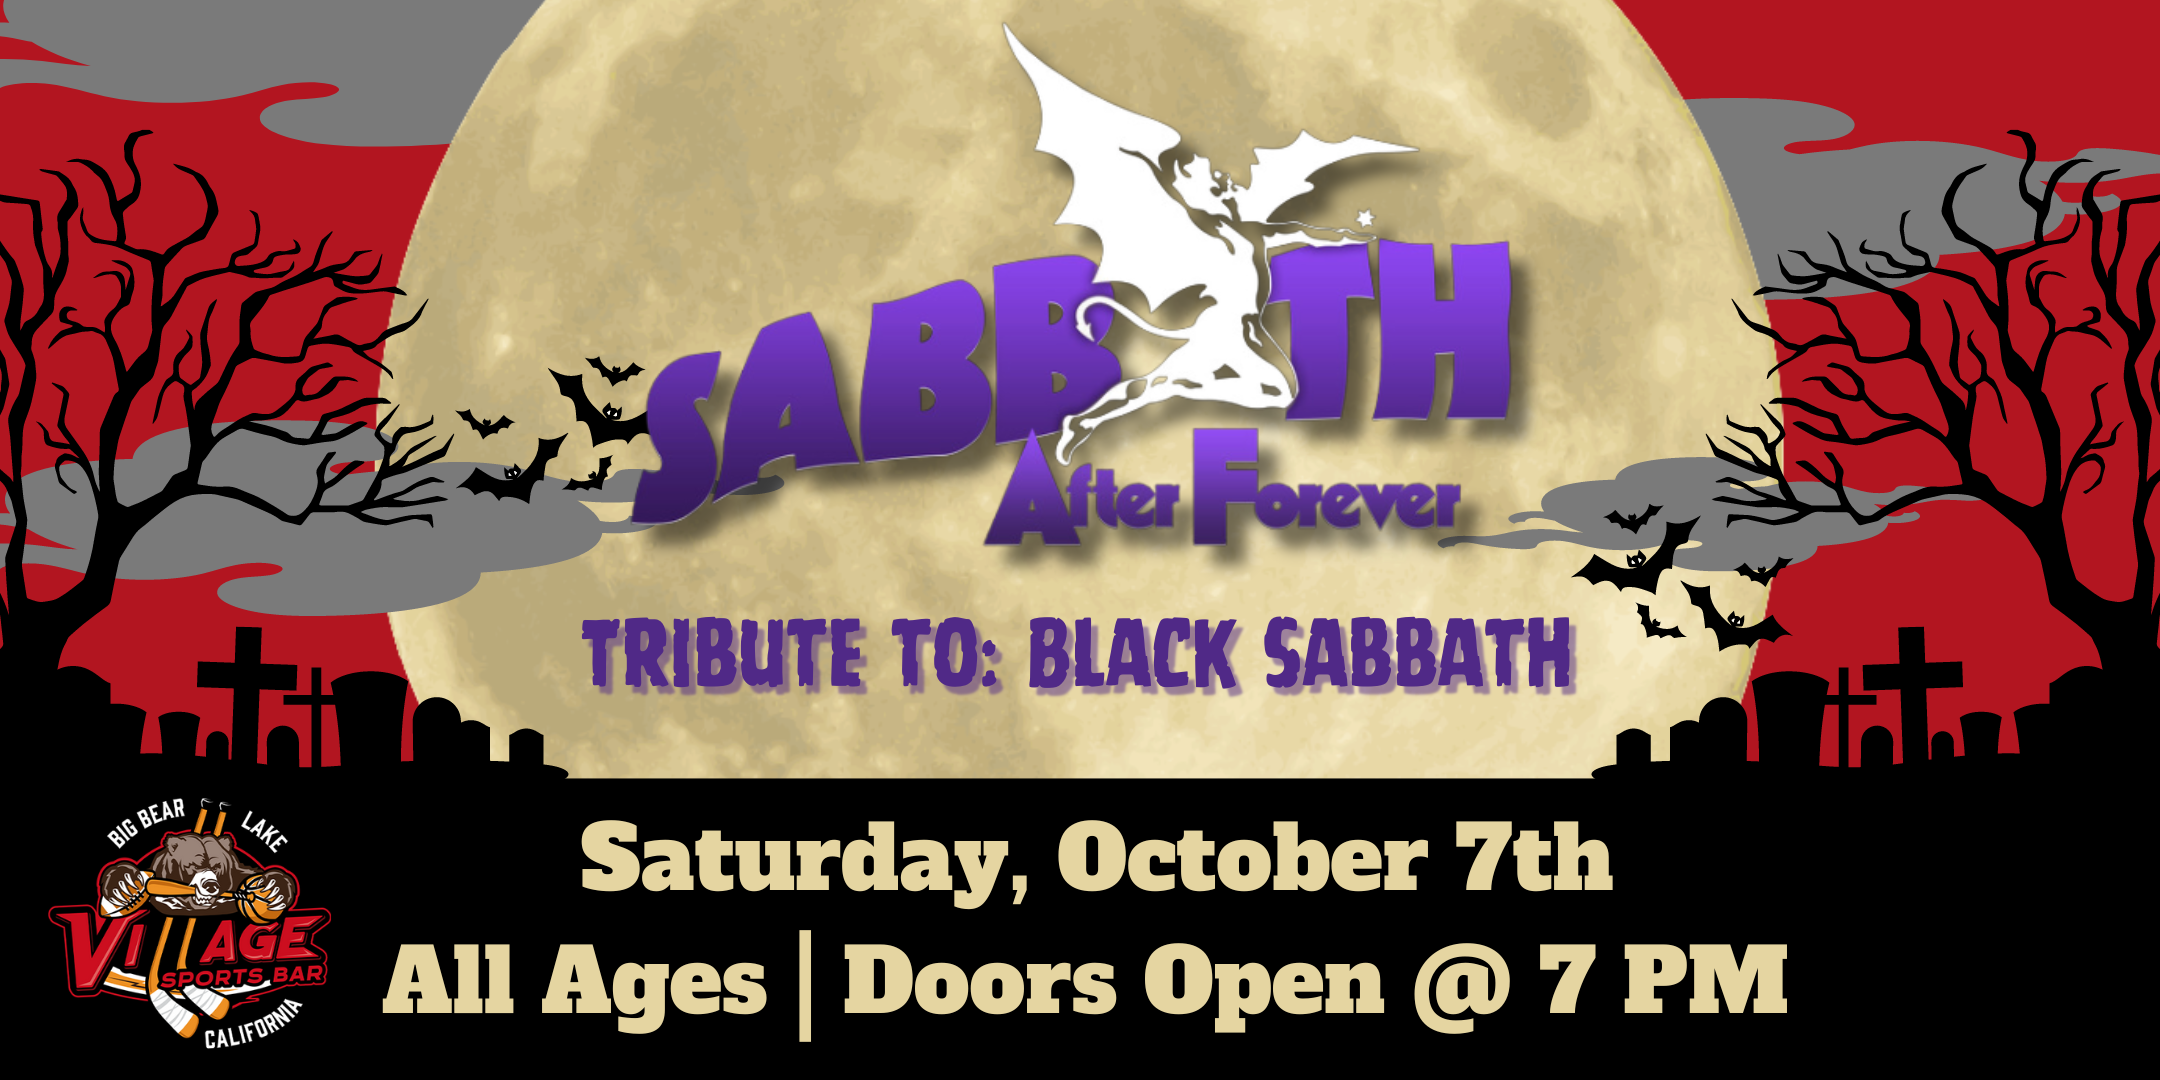 Village Sports Bar Presents: Sabbath After Forever - Tribute to Black Sabbath